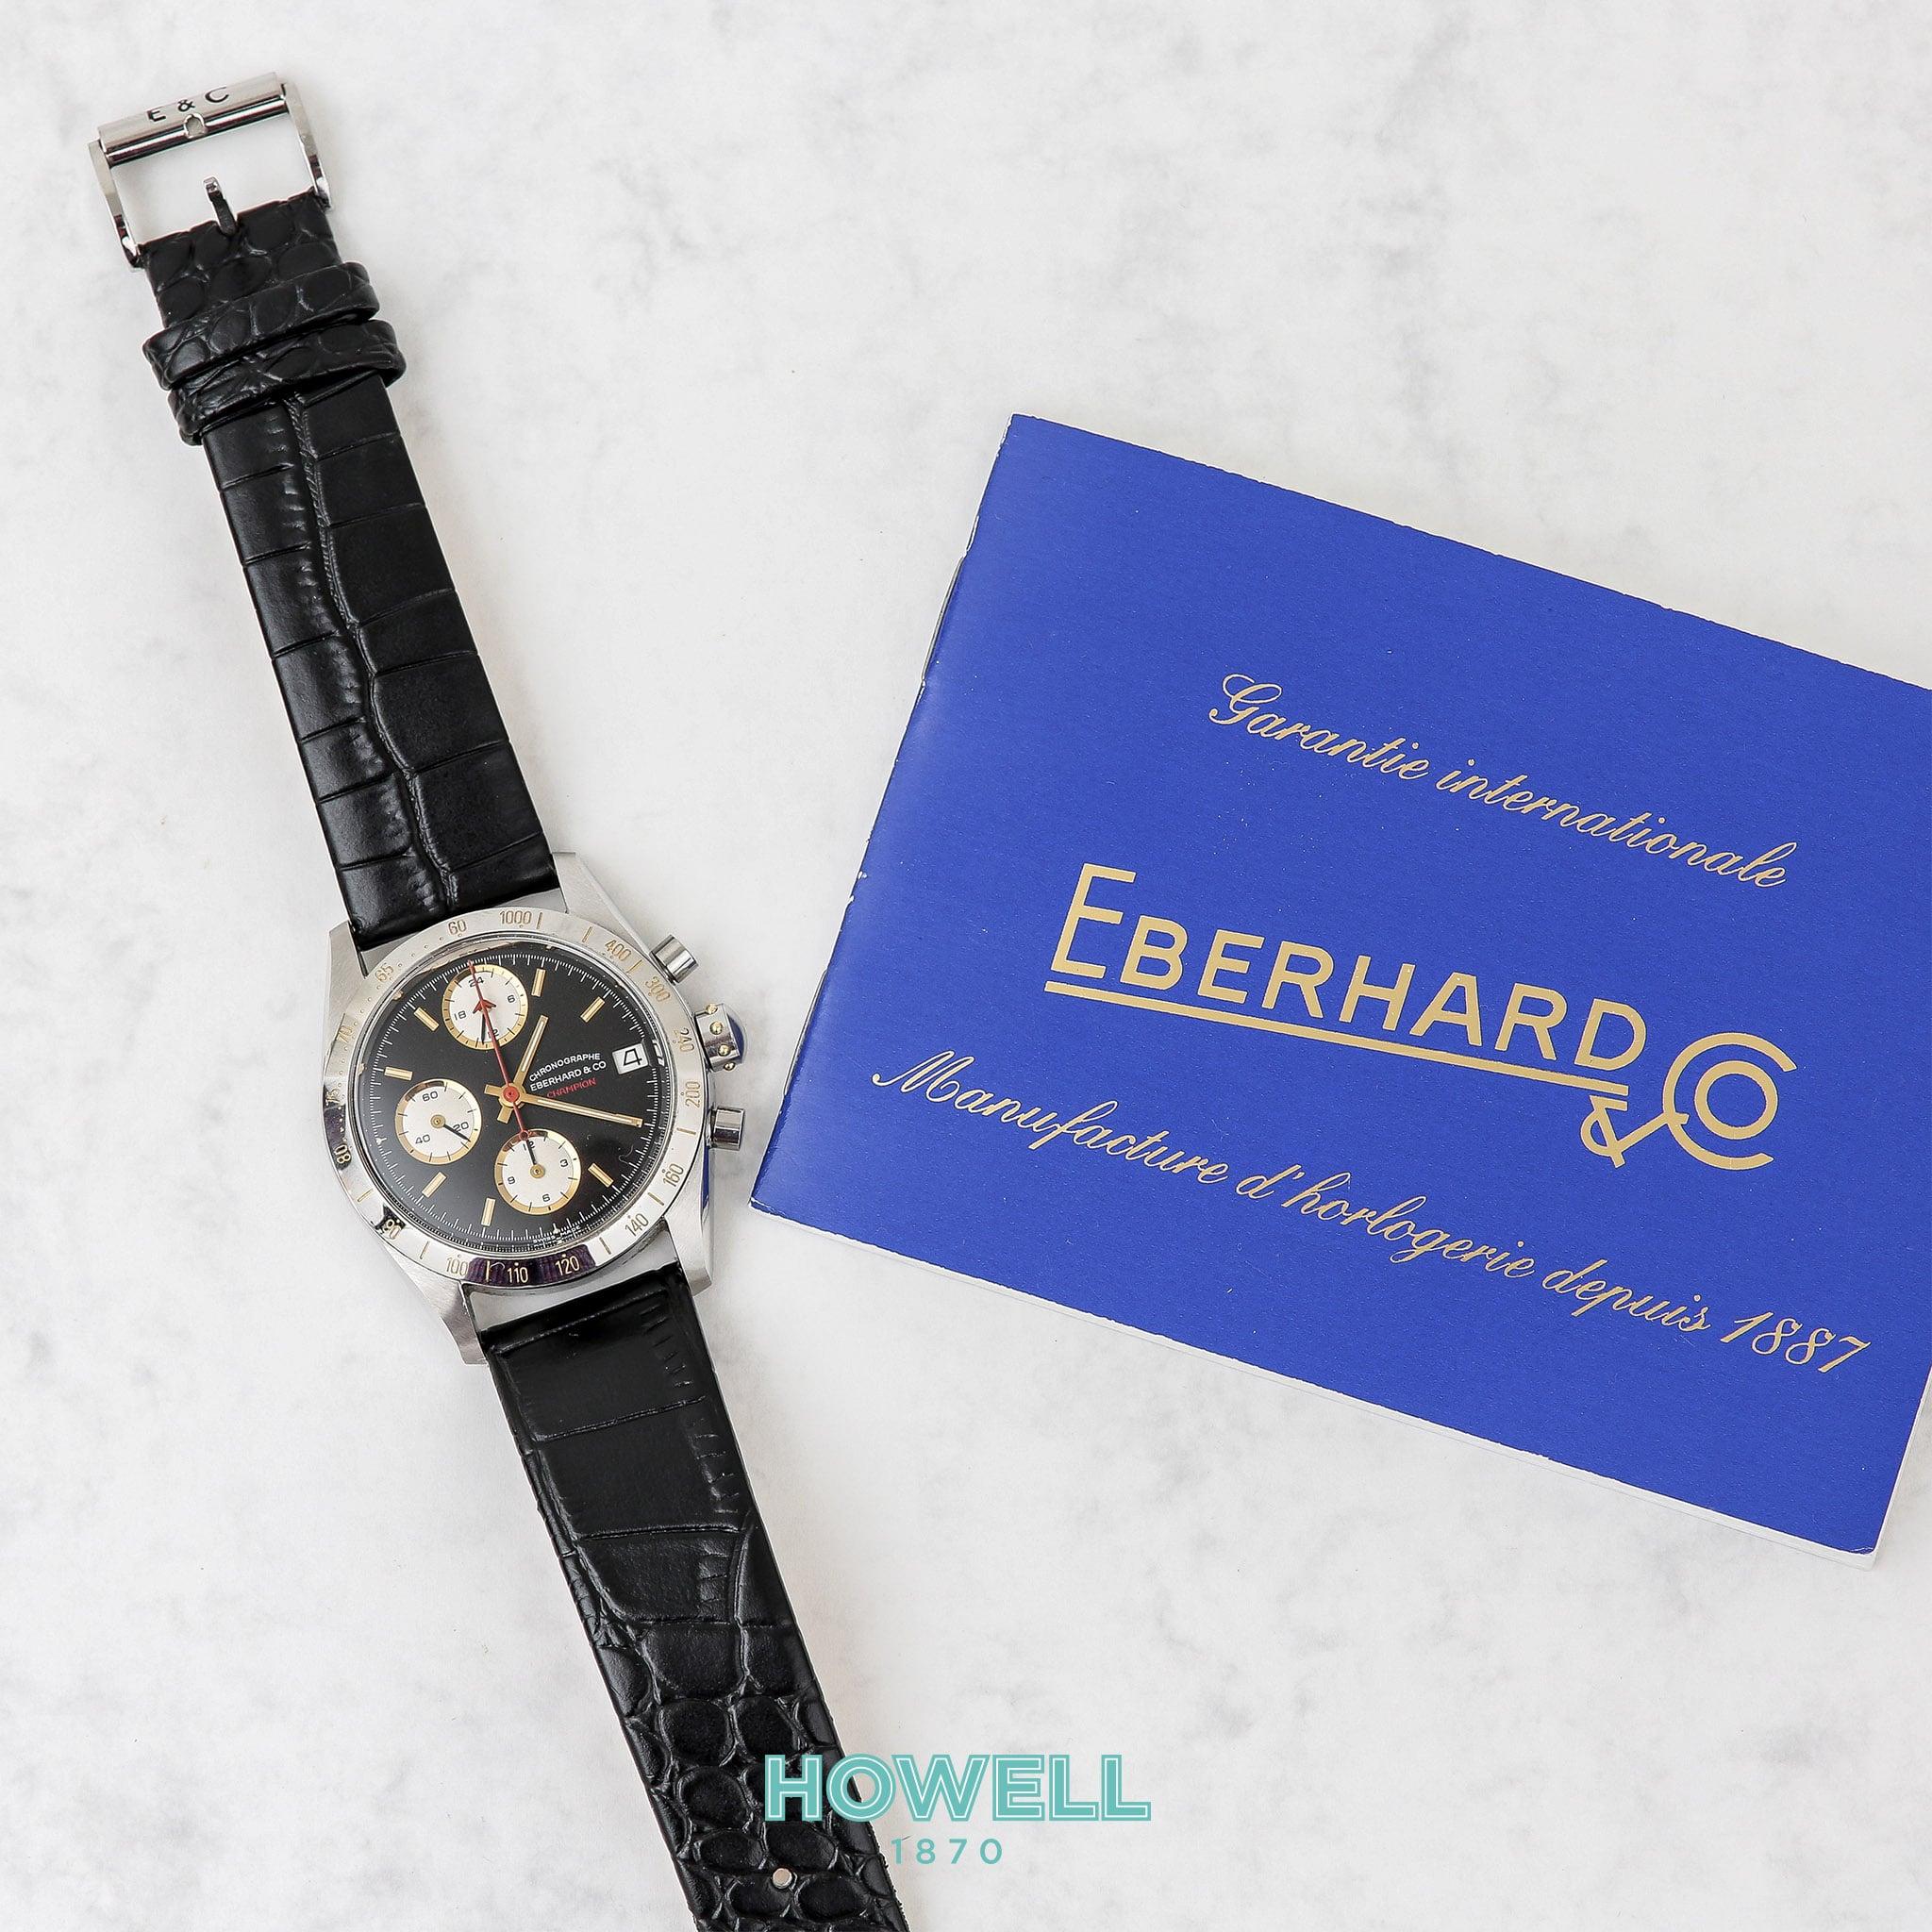 eberhard champion chronograph